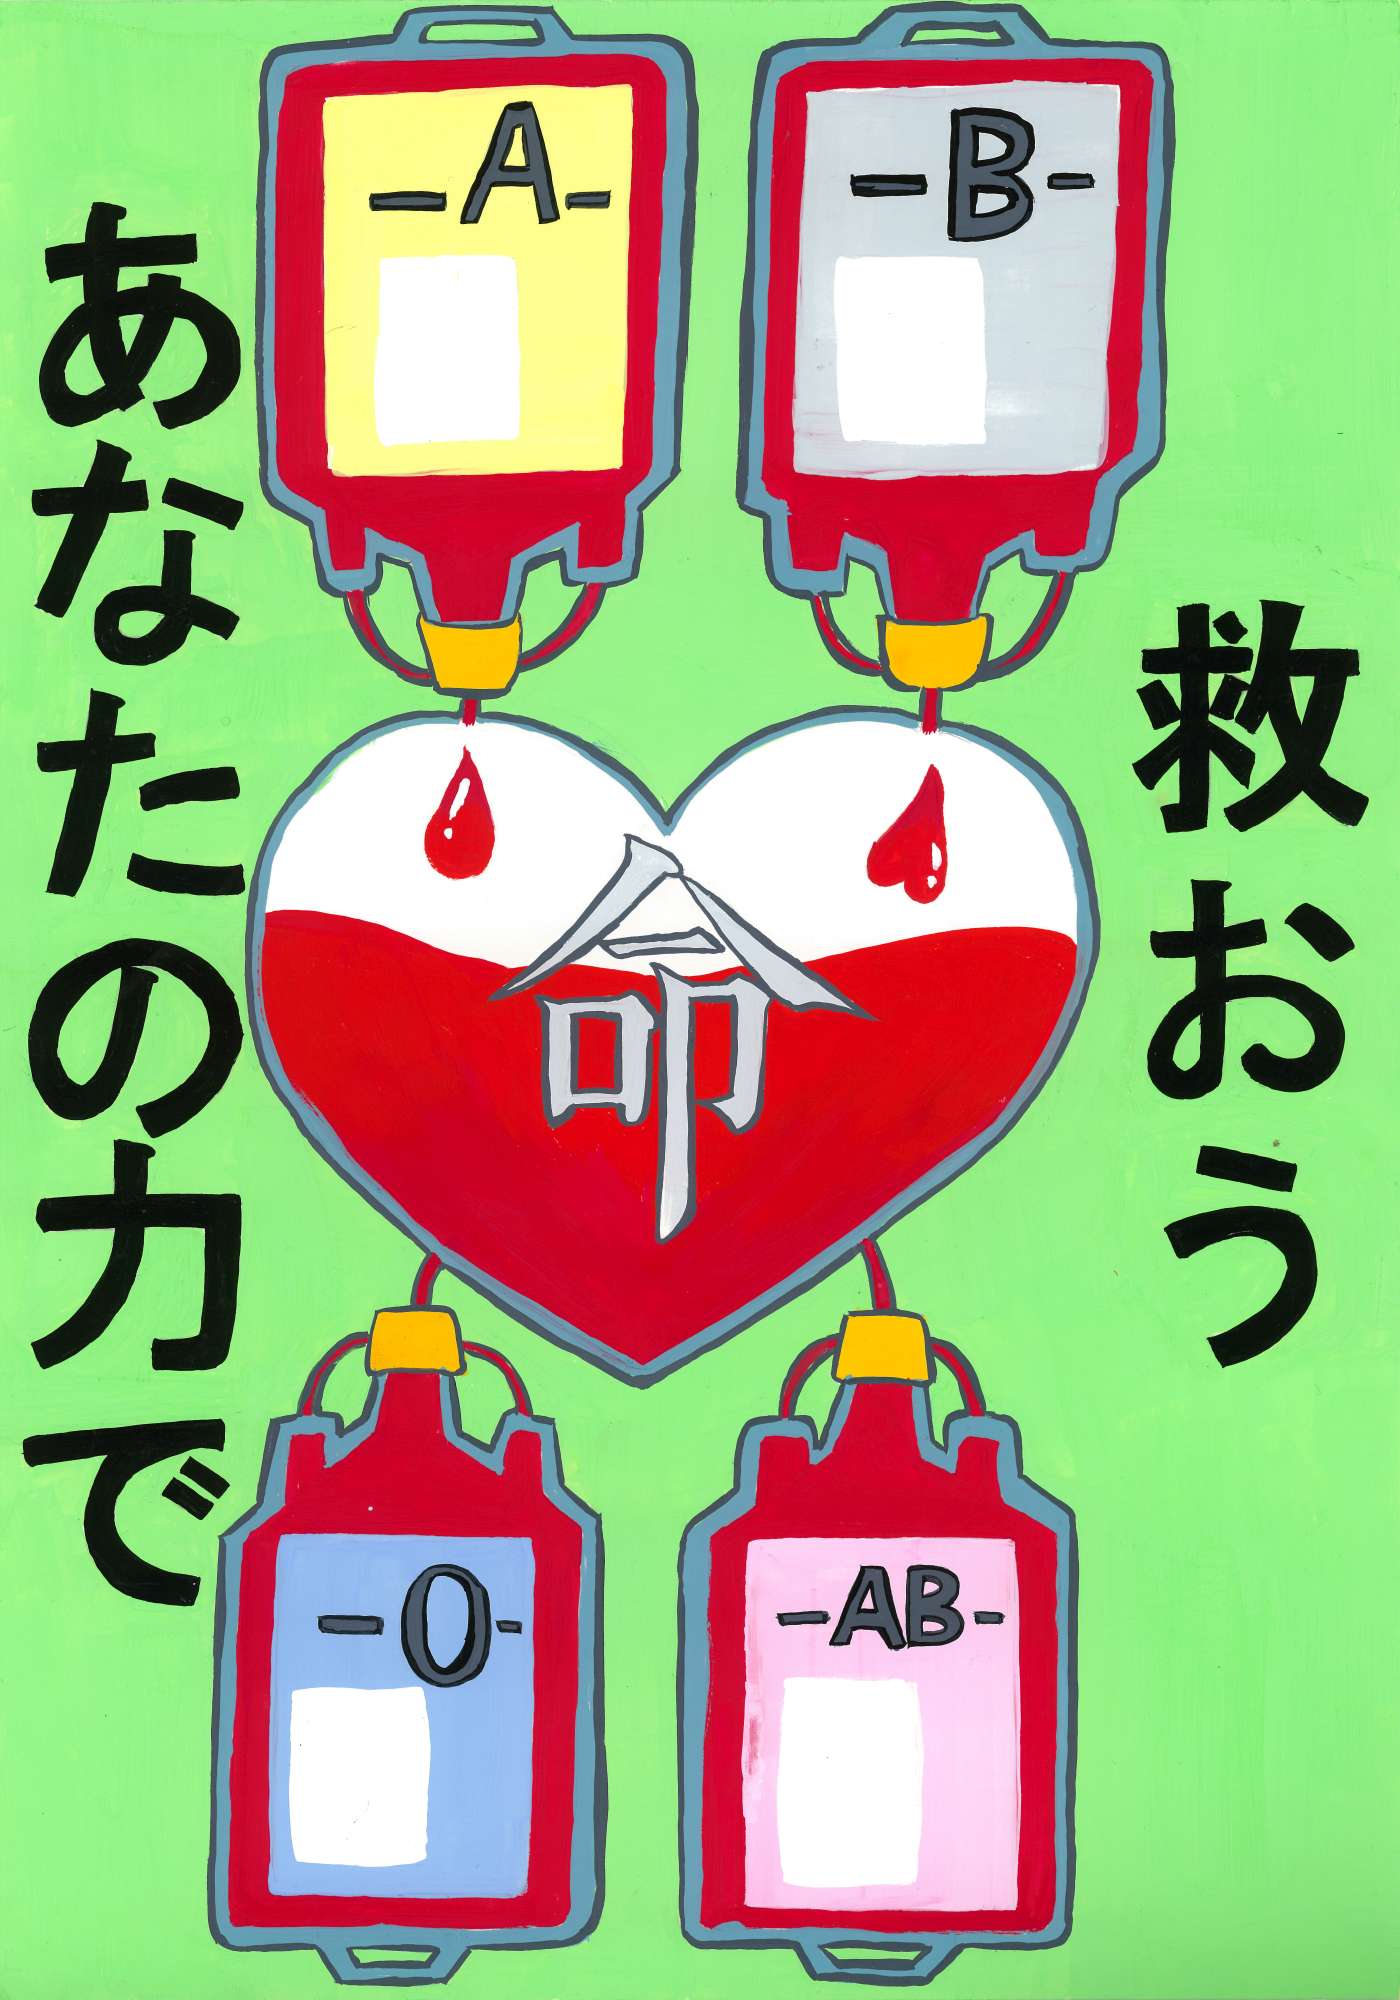 Nagoya Art Exchange 2021 - Japan - Blood donation poster